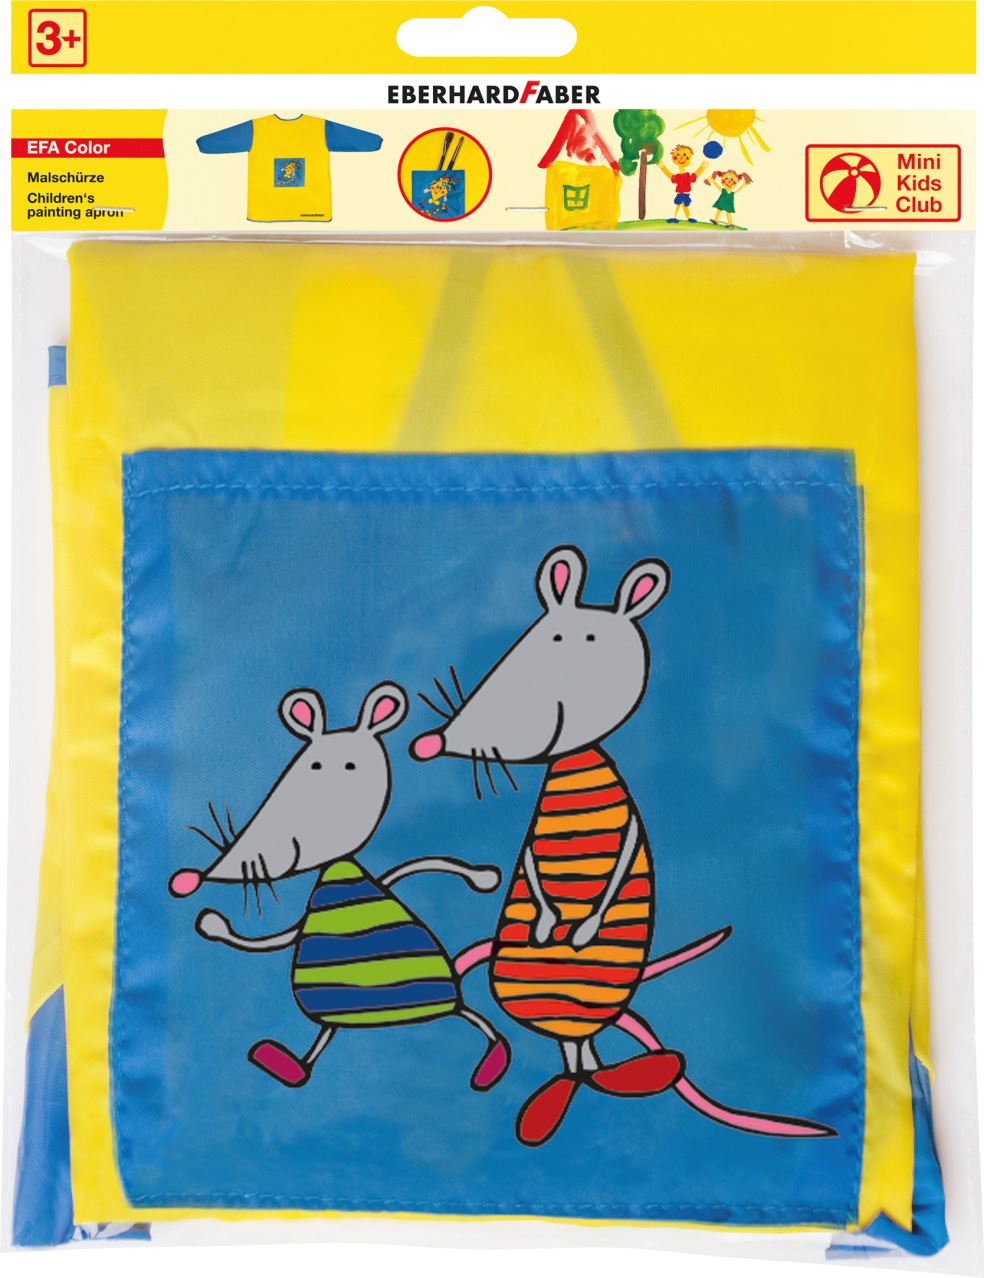 Eberhard-Faber - Mini Kids children's painting apron